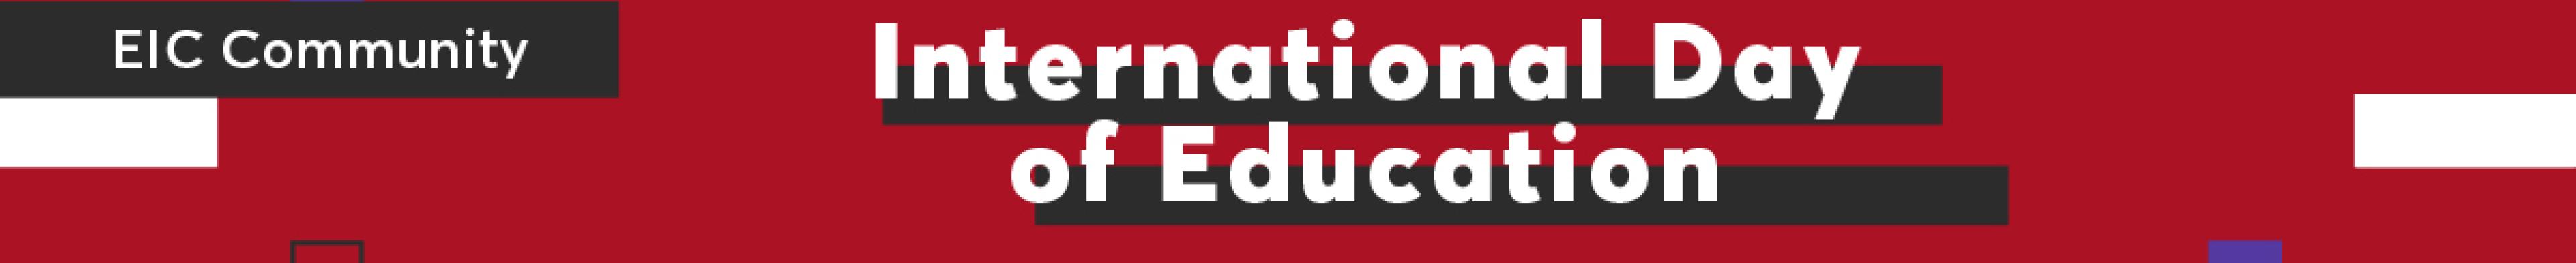 eic_world_days_international_day_of_education_community_banner.jpg